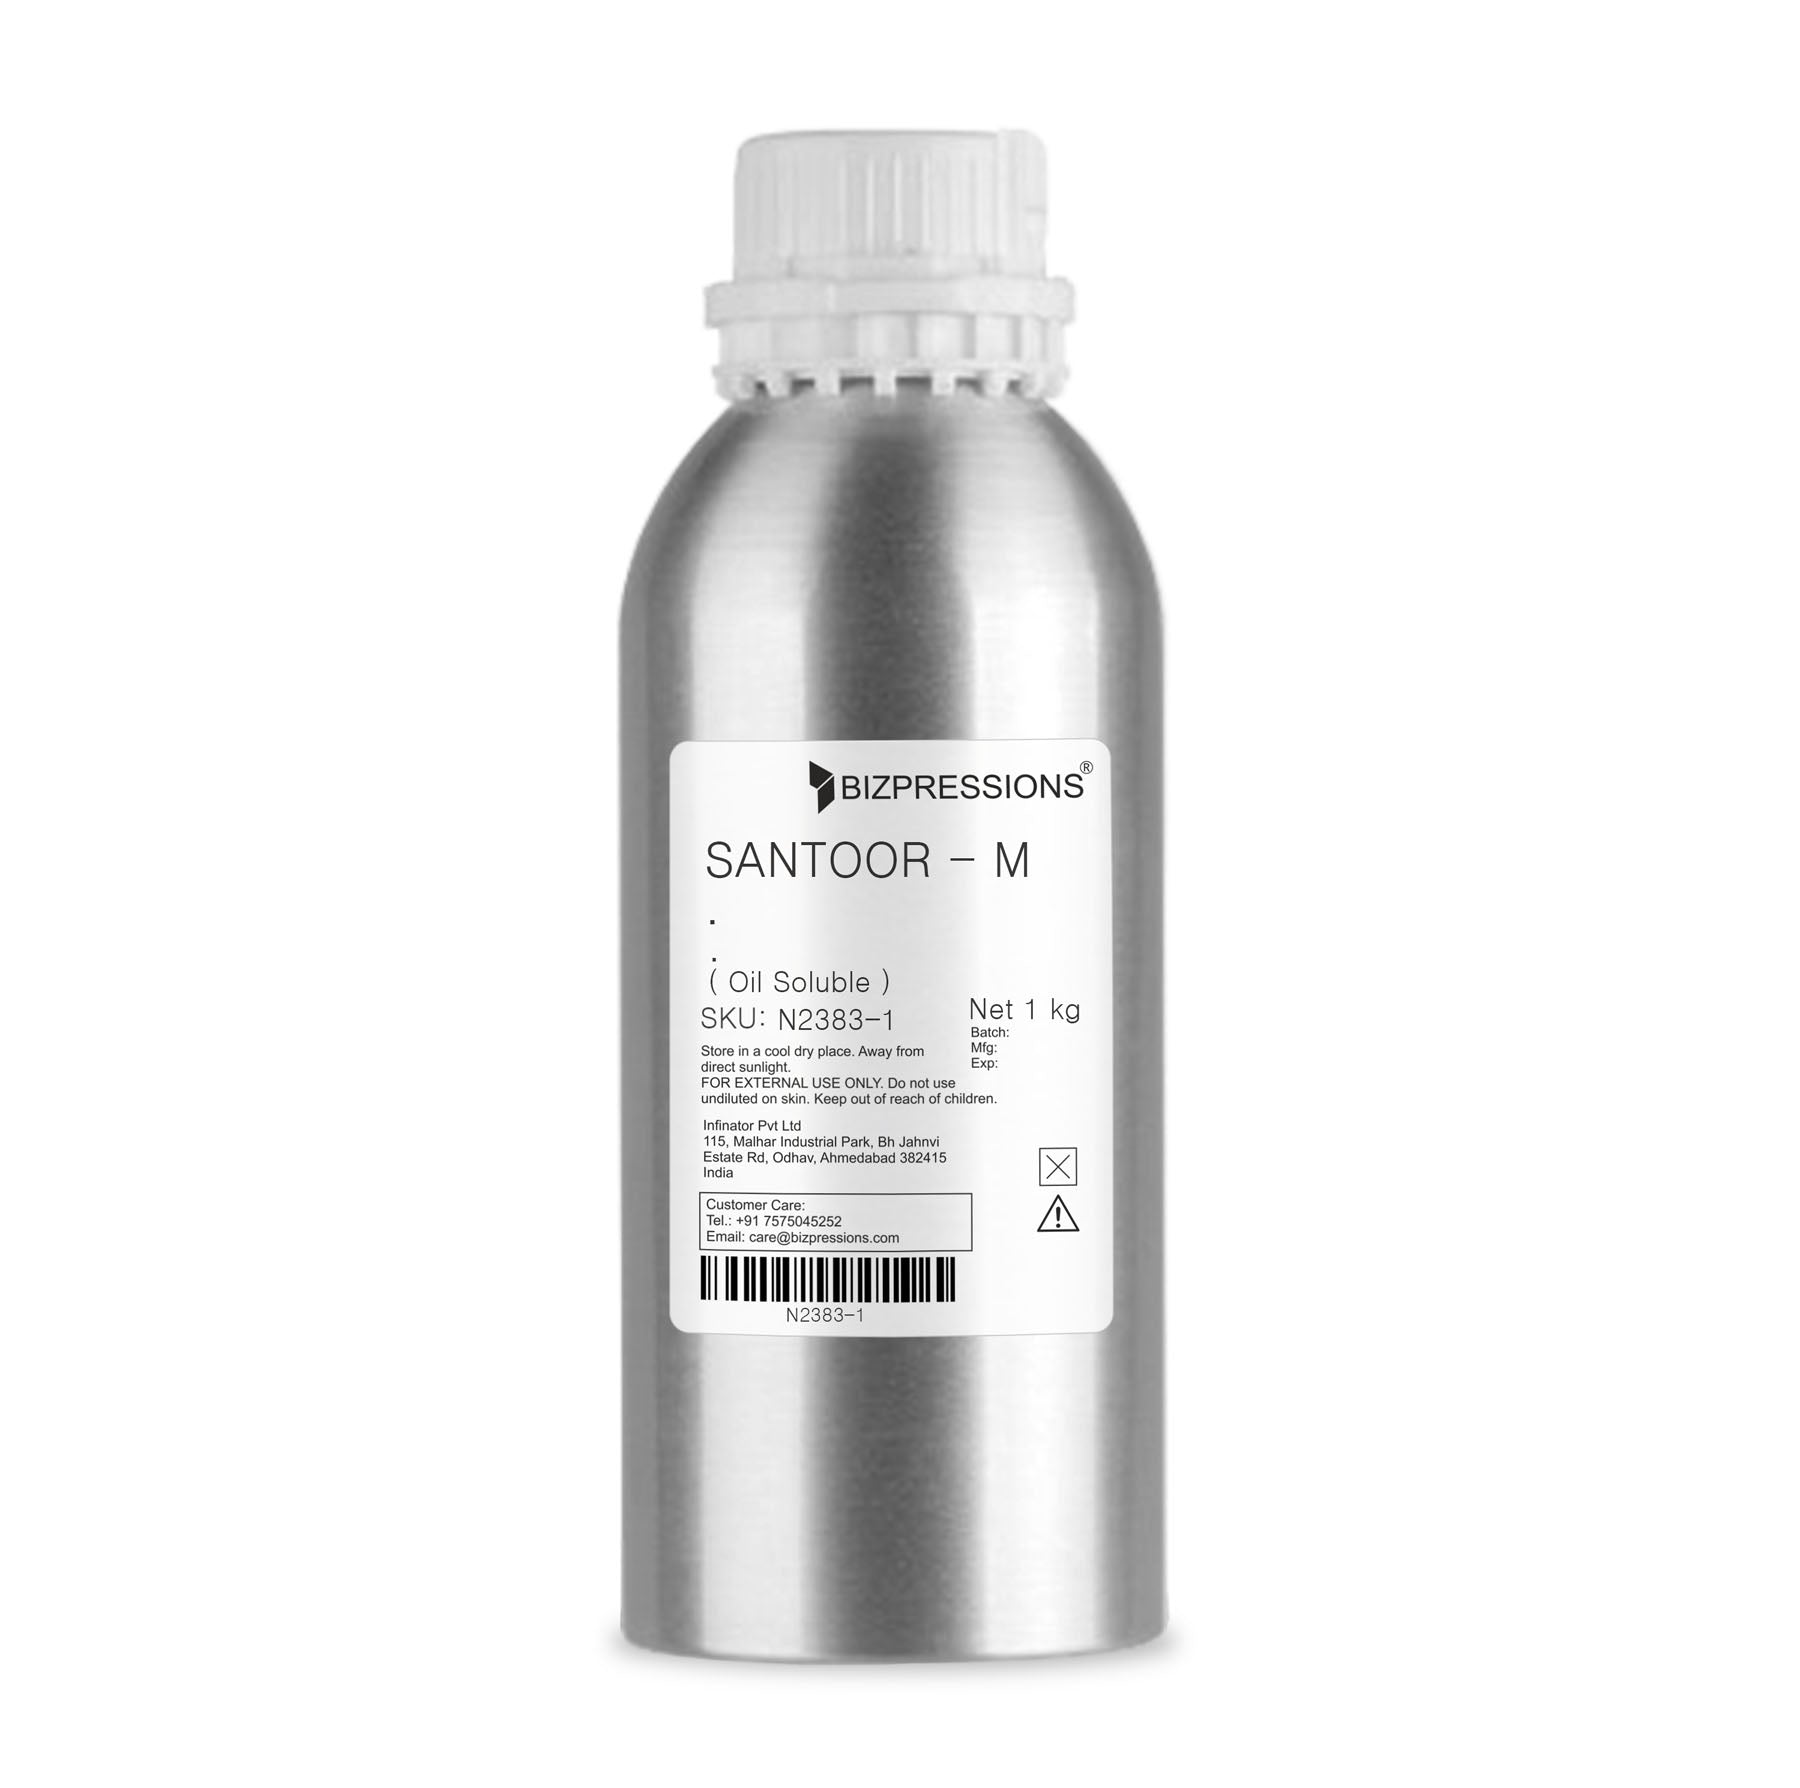 SANTOOR - M - Fragrance ( Oil Soluble ) - 1 kg